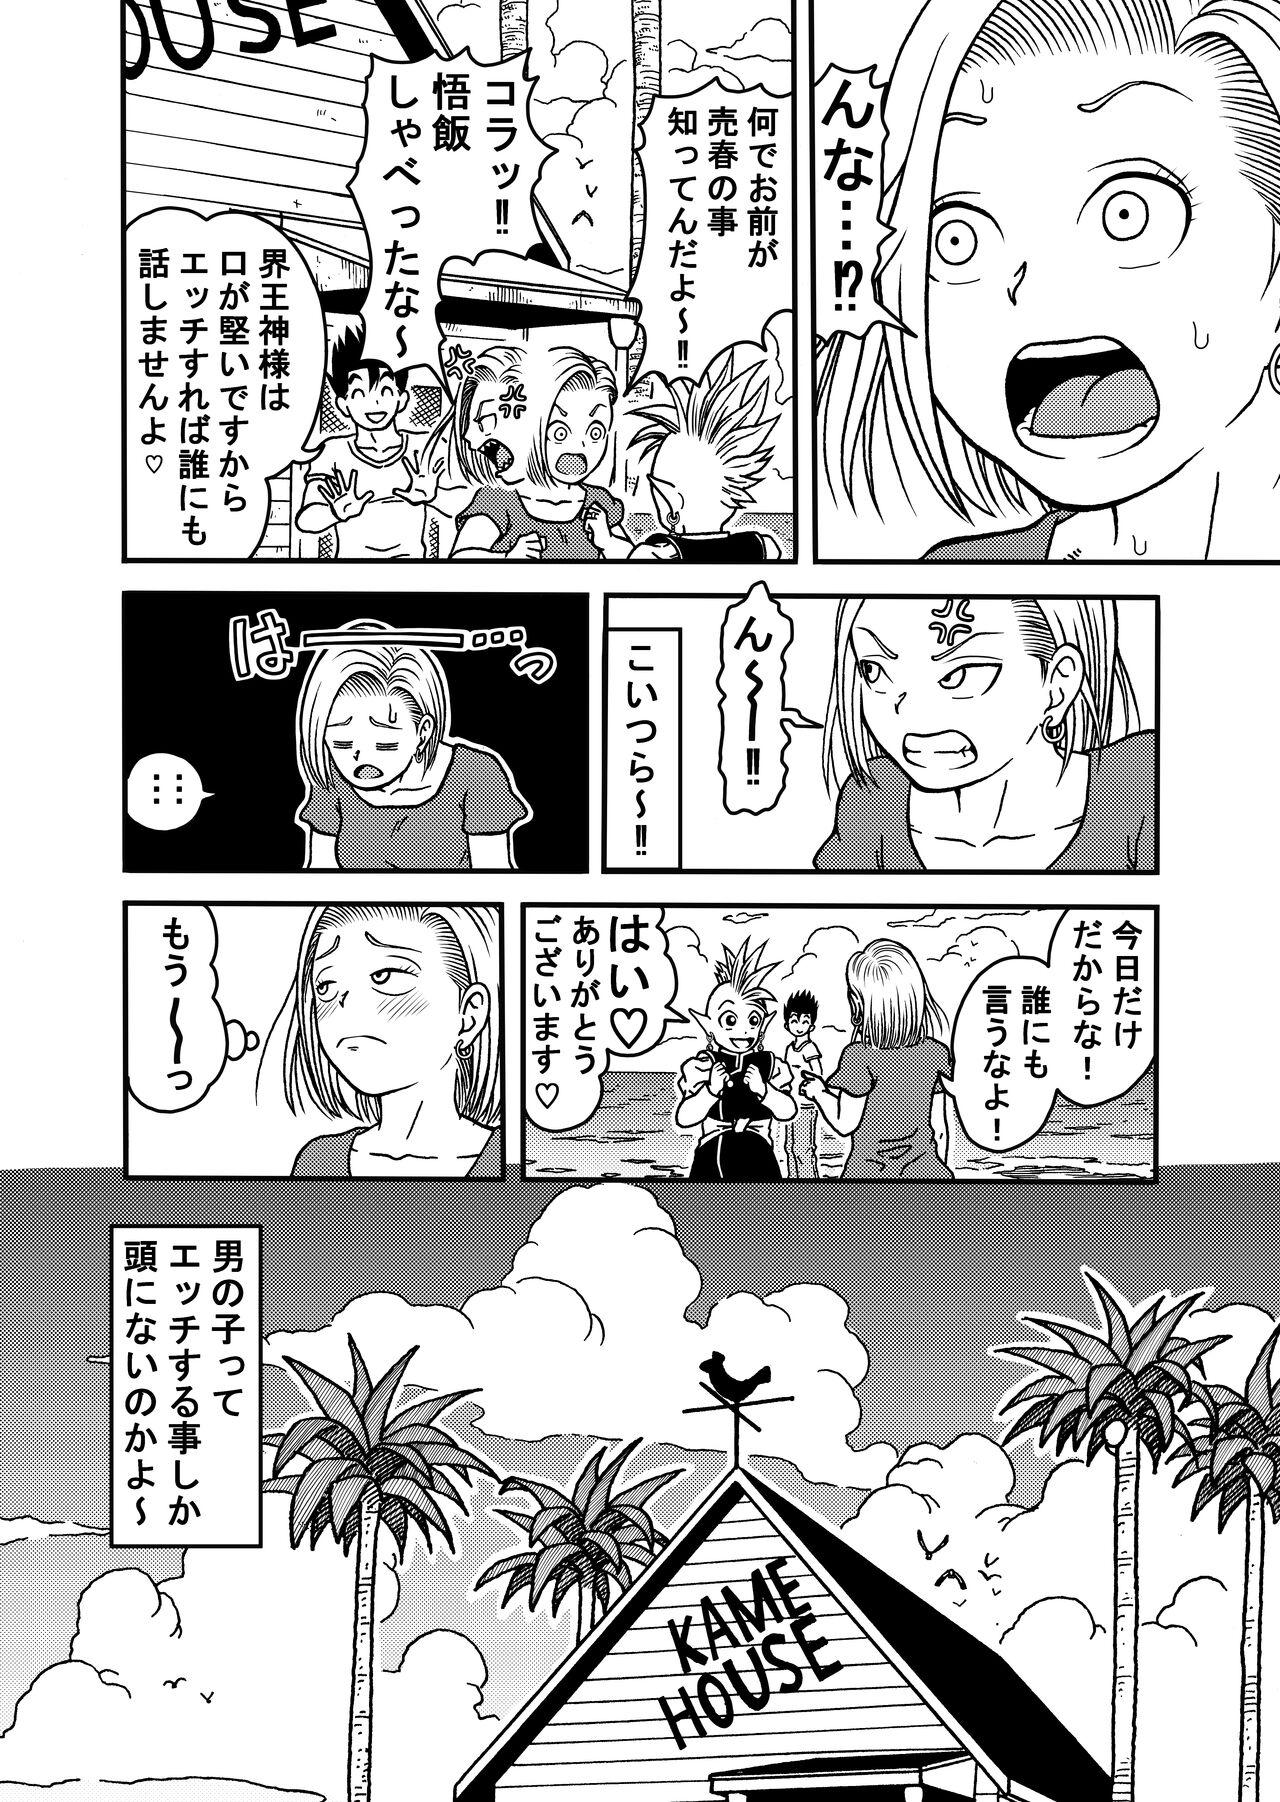 Jock 18-gou NTR Nakadashi on Parade 5 - Dragon ball z This - Page 10